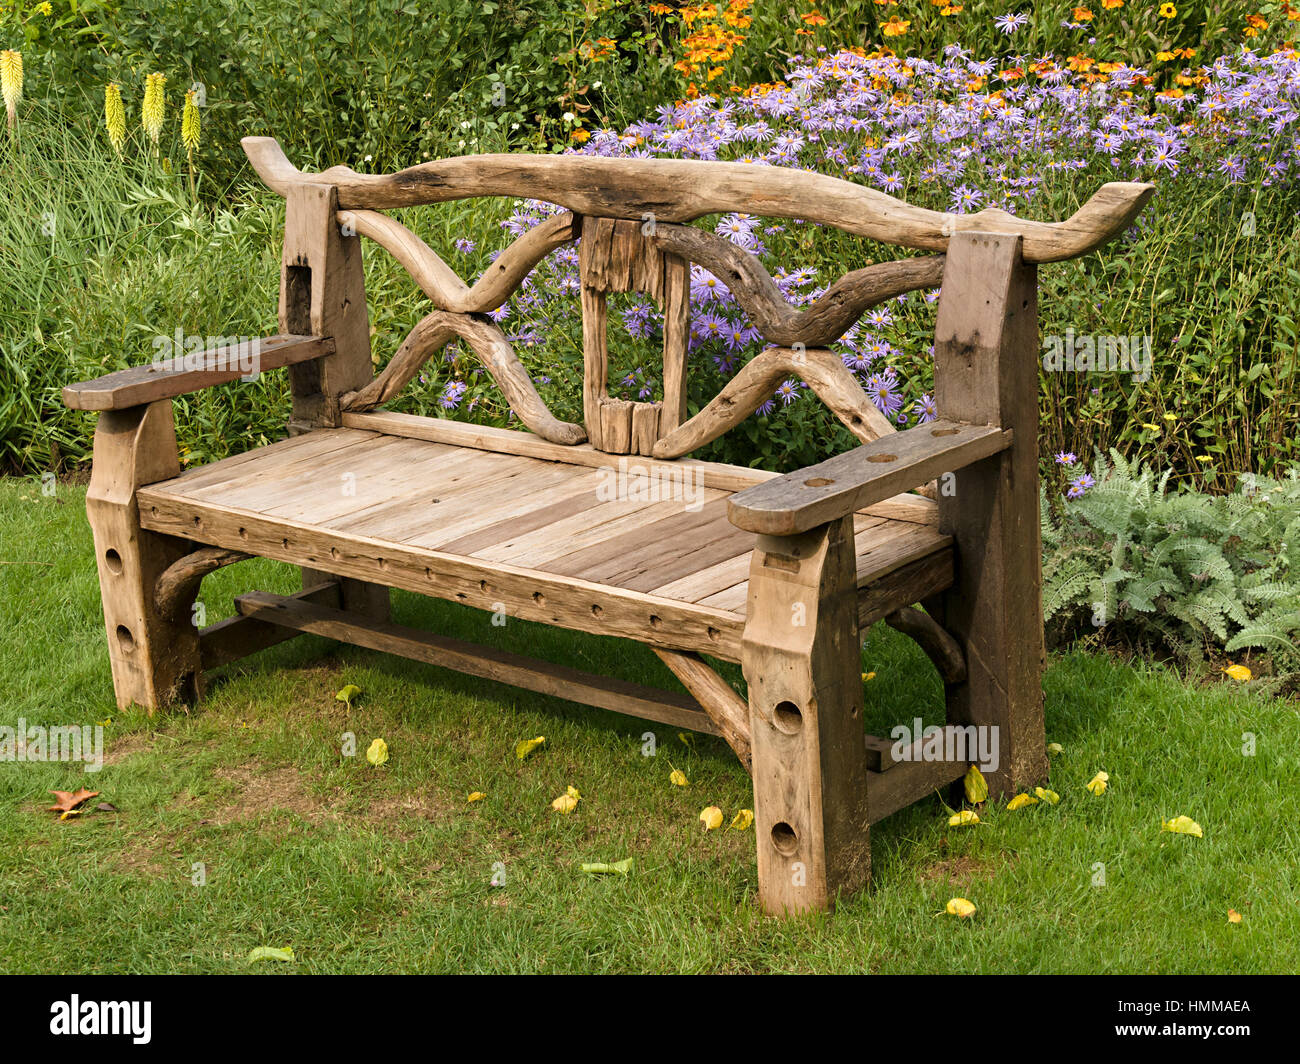 Kunstvolle, rustikal, hölzerne Garten Sitzbank, hergestellt aus recycelten  Holzteile vor unteren Betten, Coton Manor Gardens, Northamptonshire,  England, UK Stockfotografie - Alamy